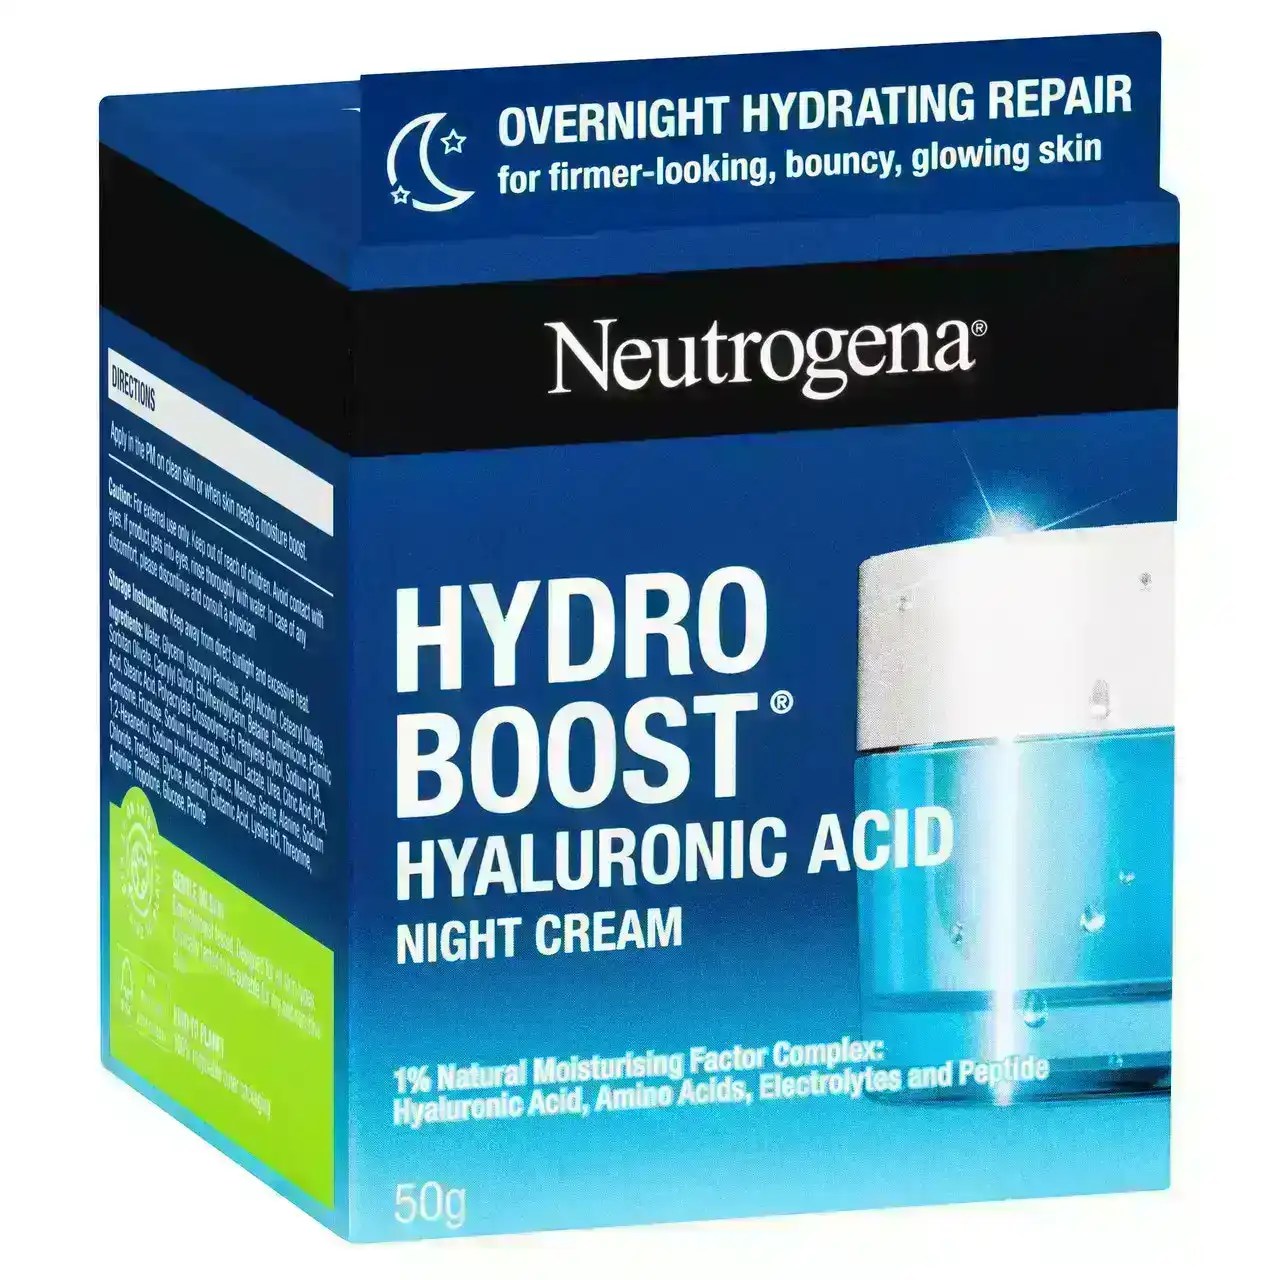 Neutrogena Hydro Boost Hyaluronic Acid Night Face Cream 50g